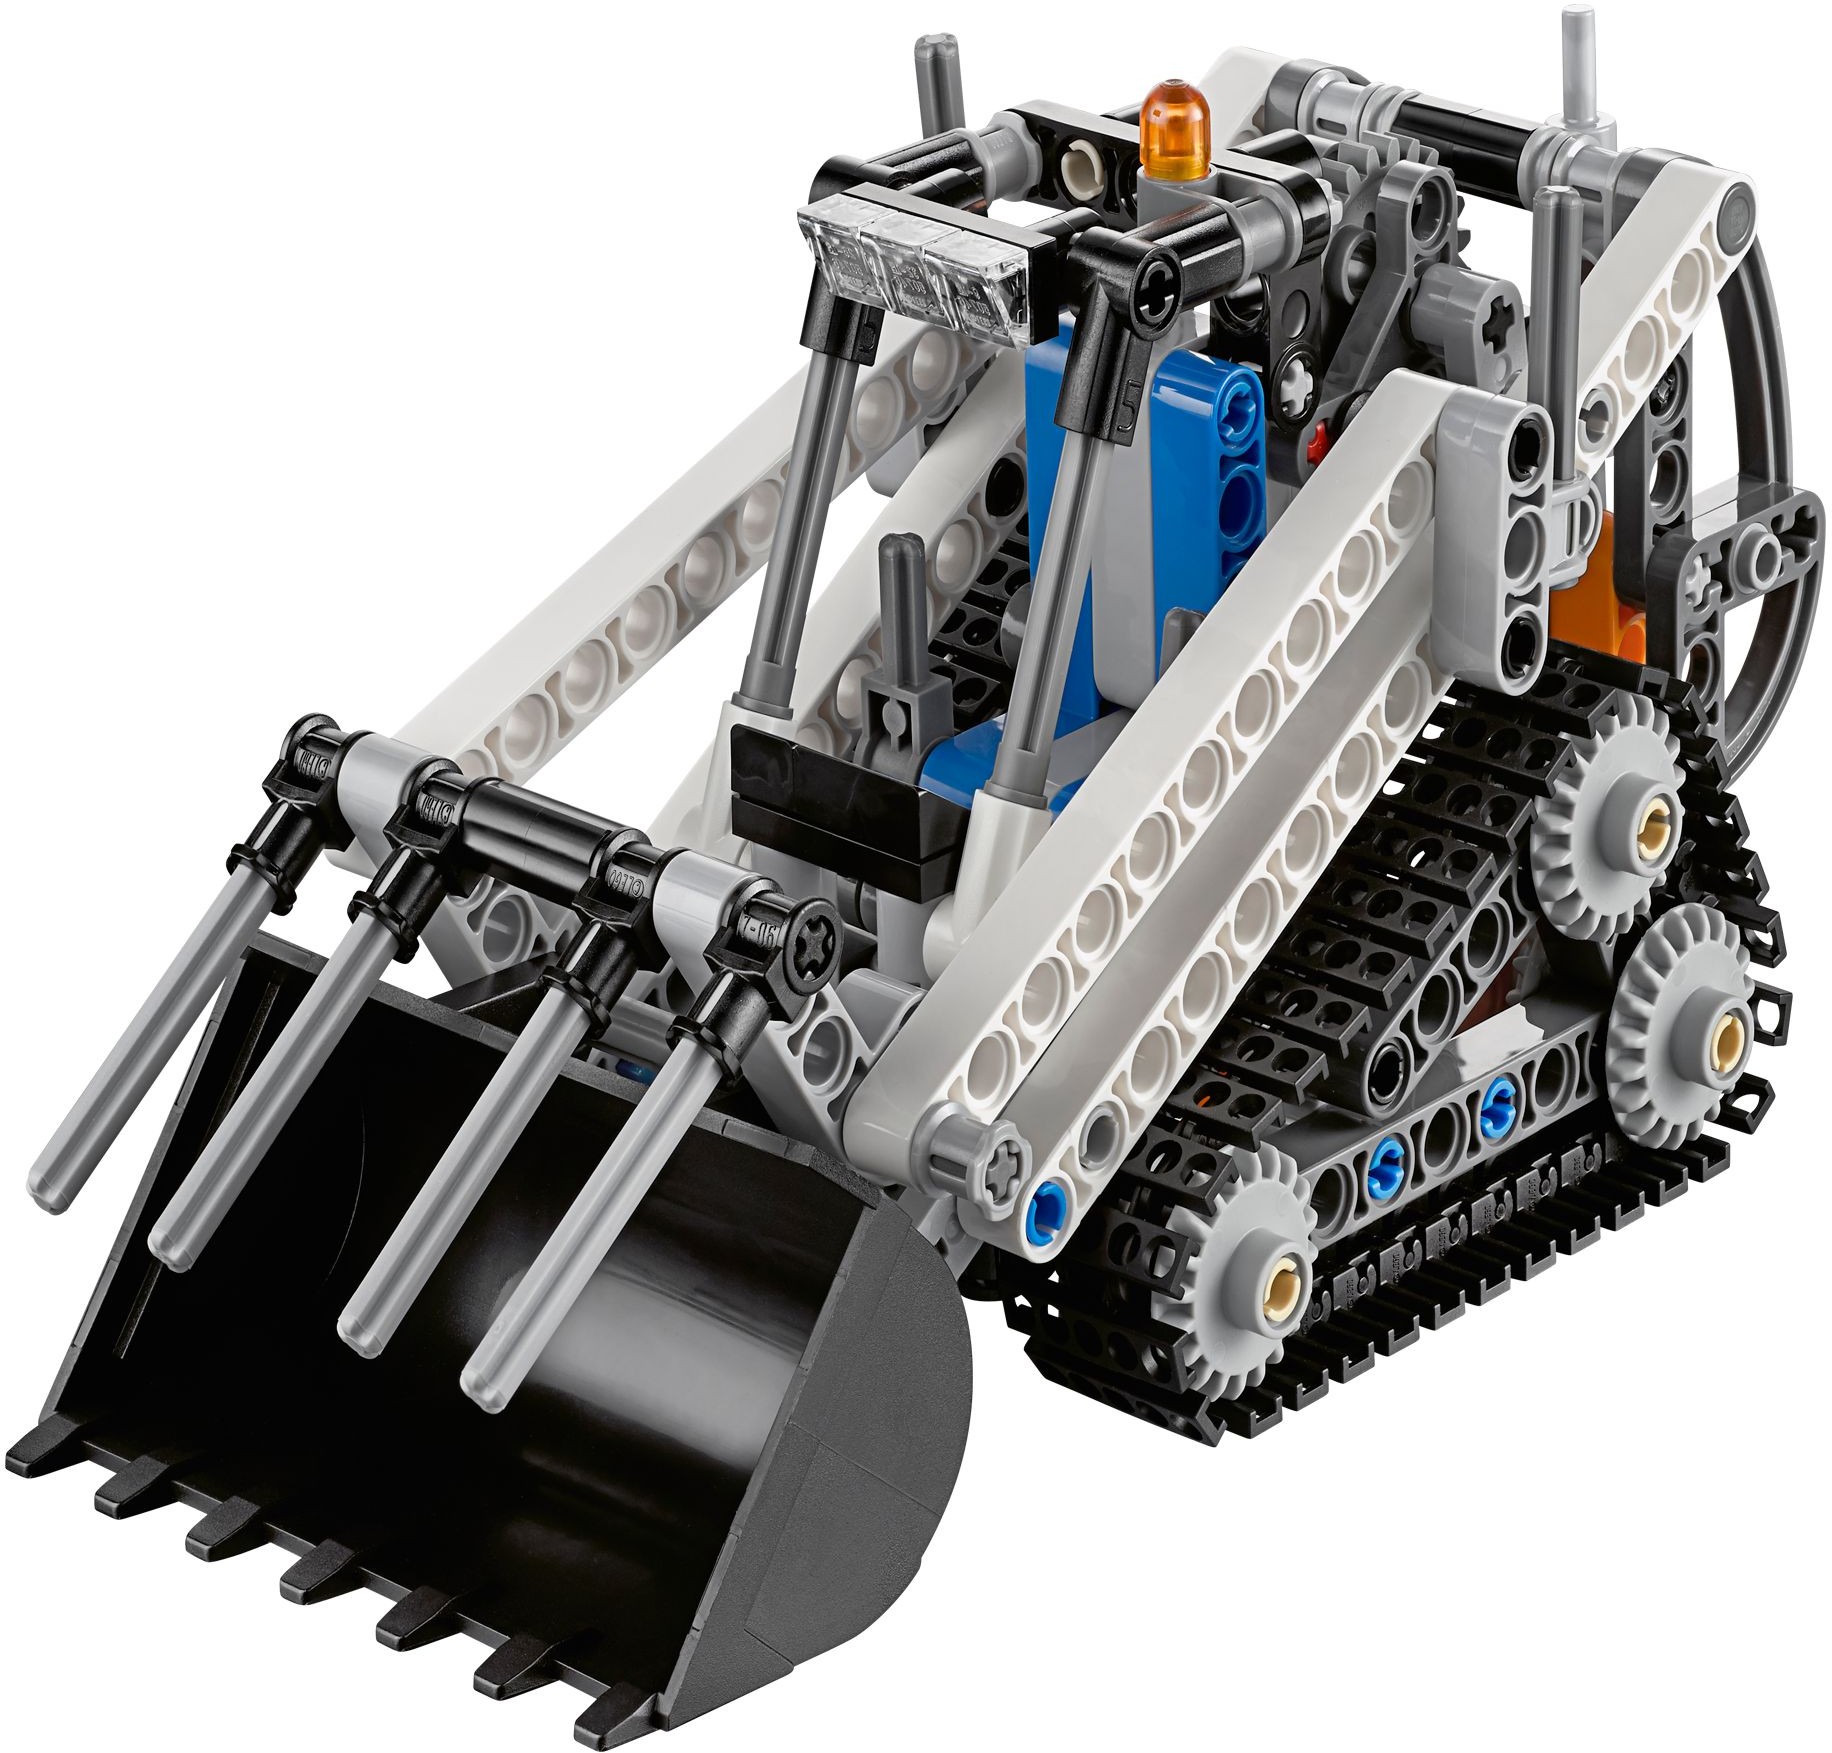 tricky sneen kopi LEGO Technic 2015 | Brickset